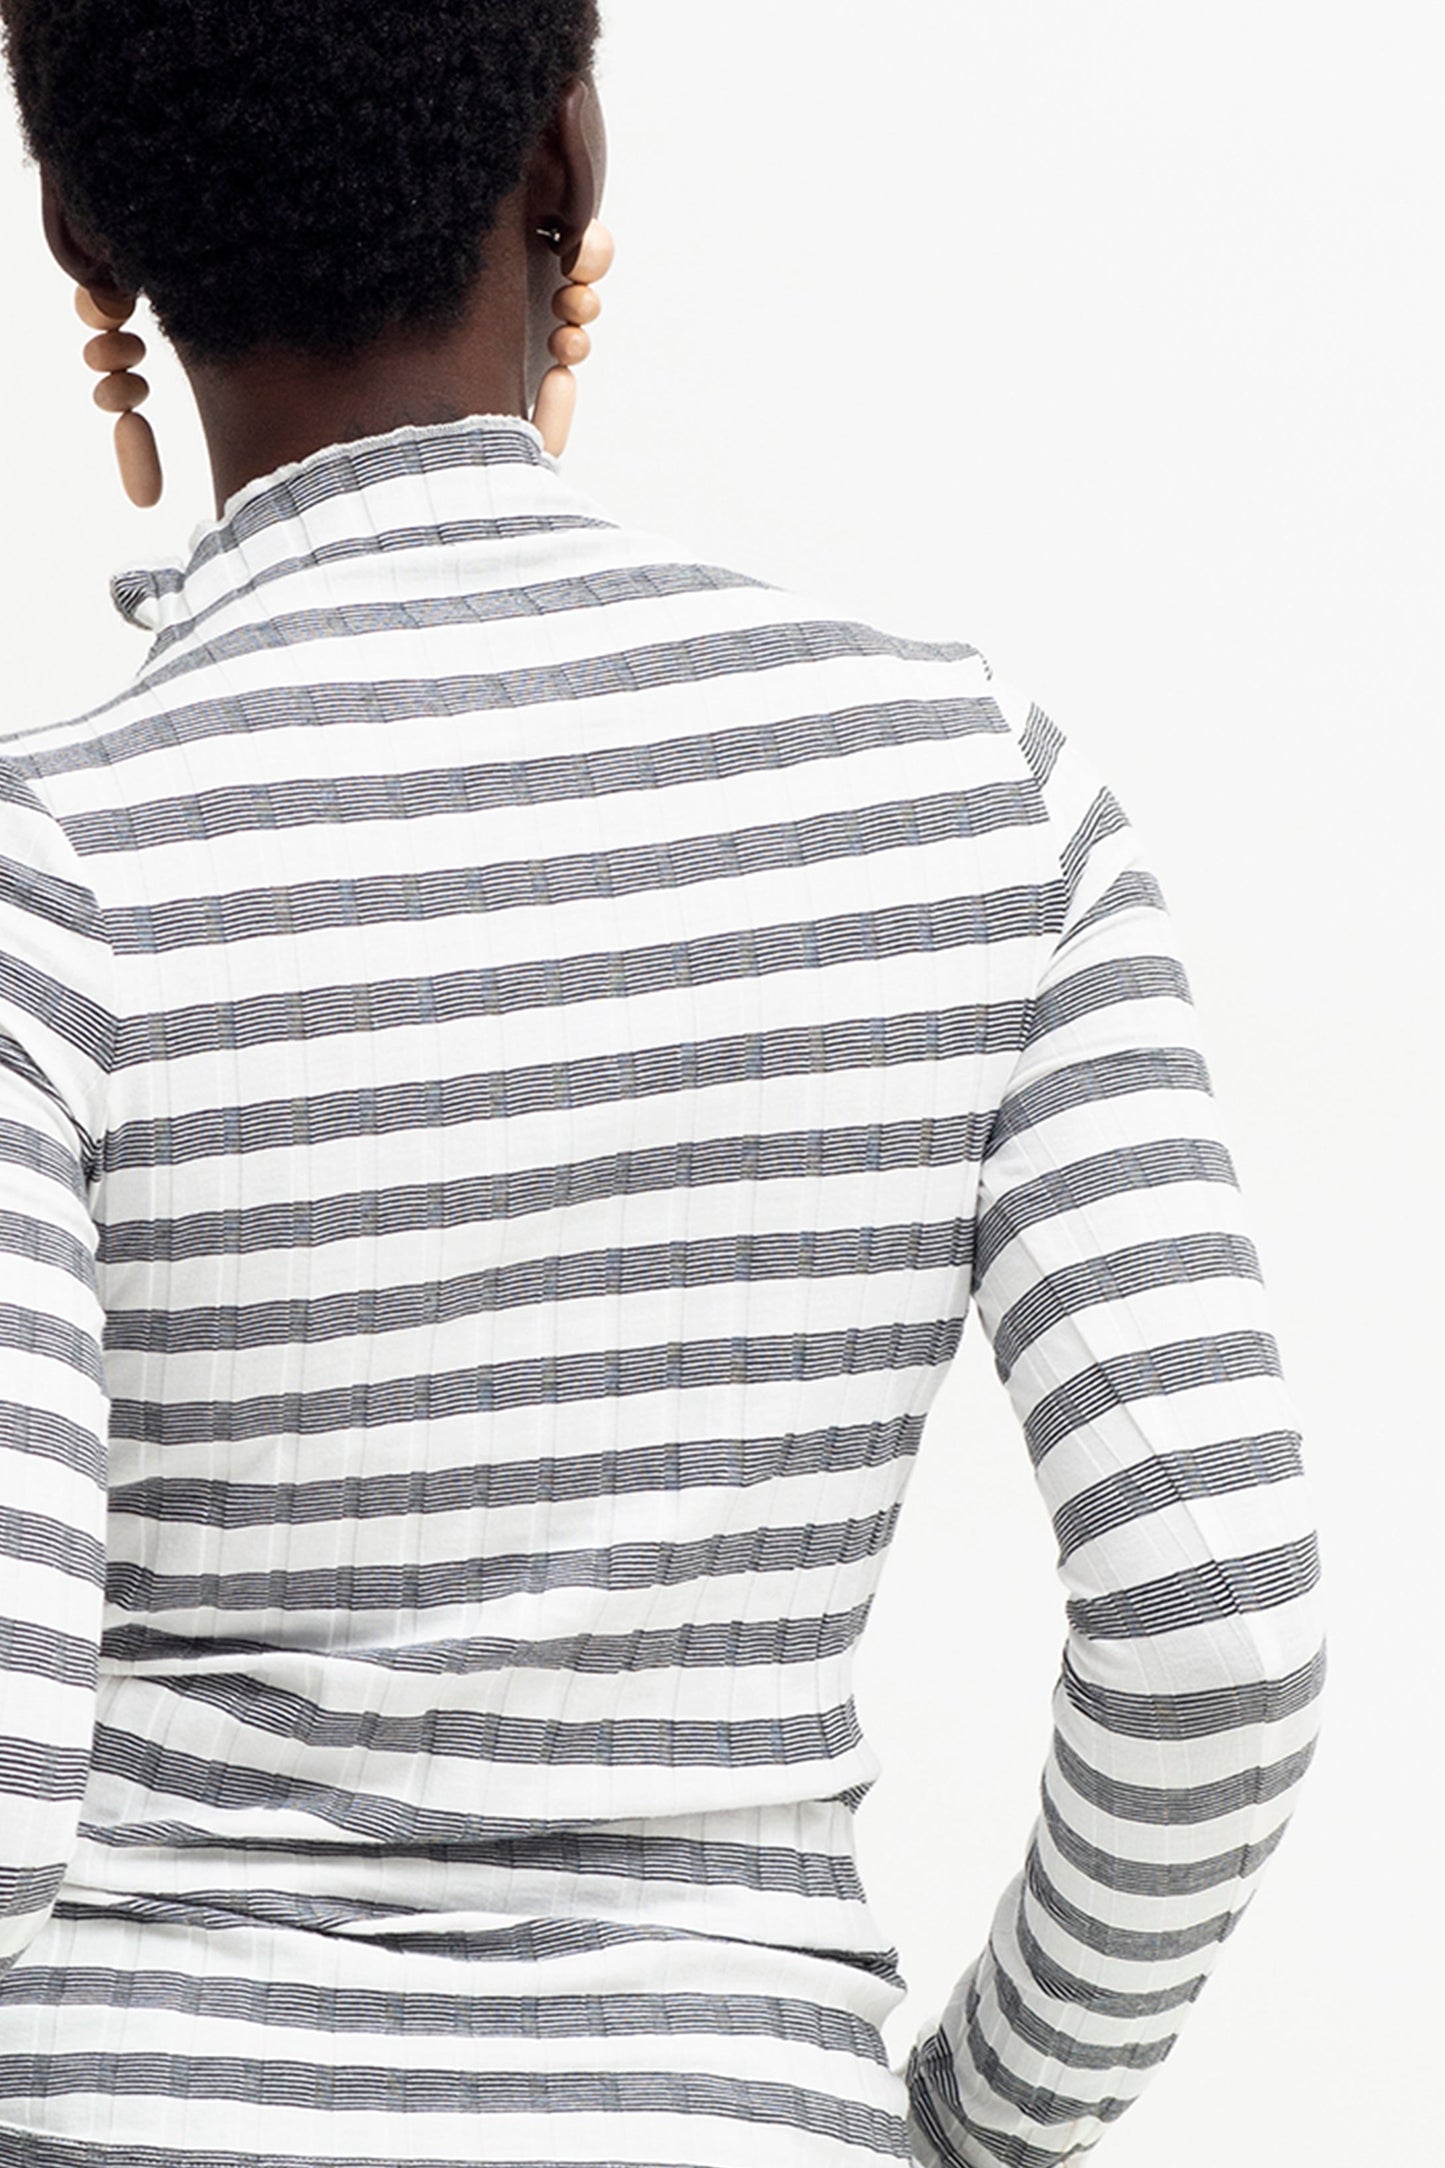 Skiva Striped and Ribbed Australian Cotton Long Sleeve Jersey Turtleneck Top Model Detail | WHITE BLACK STRIPE